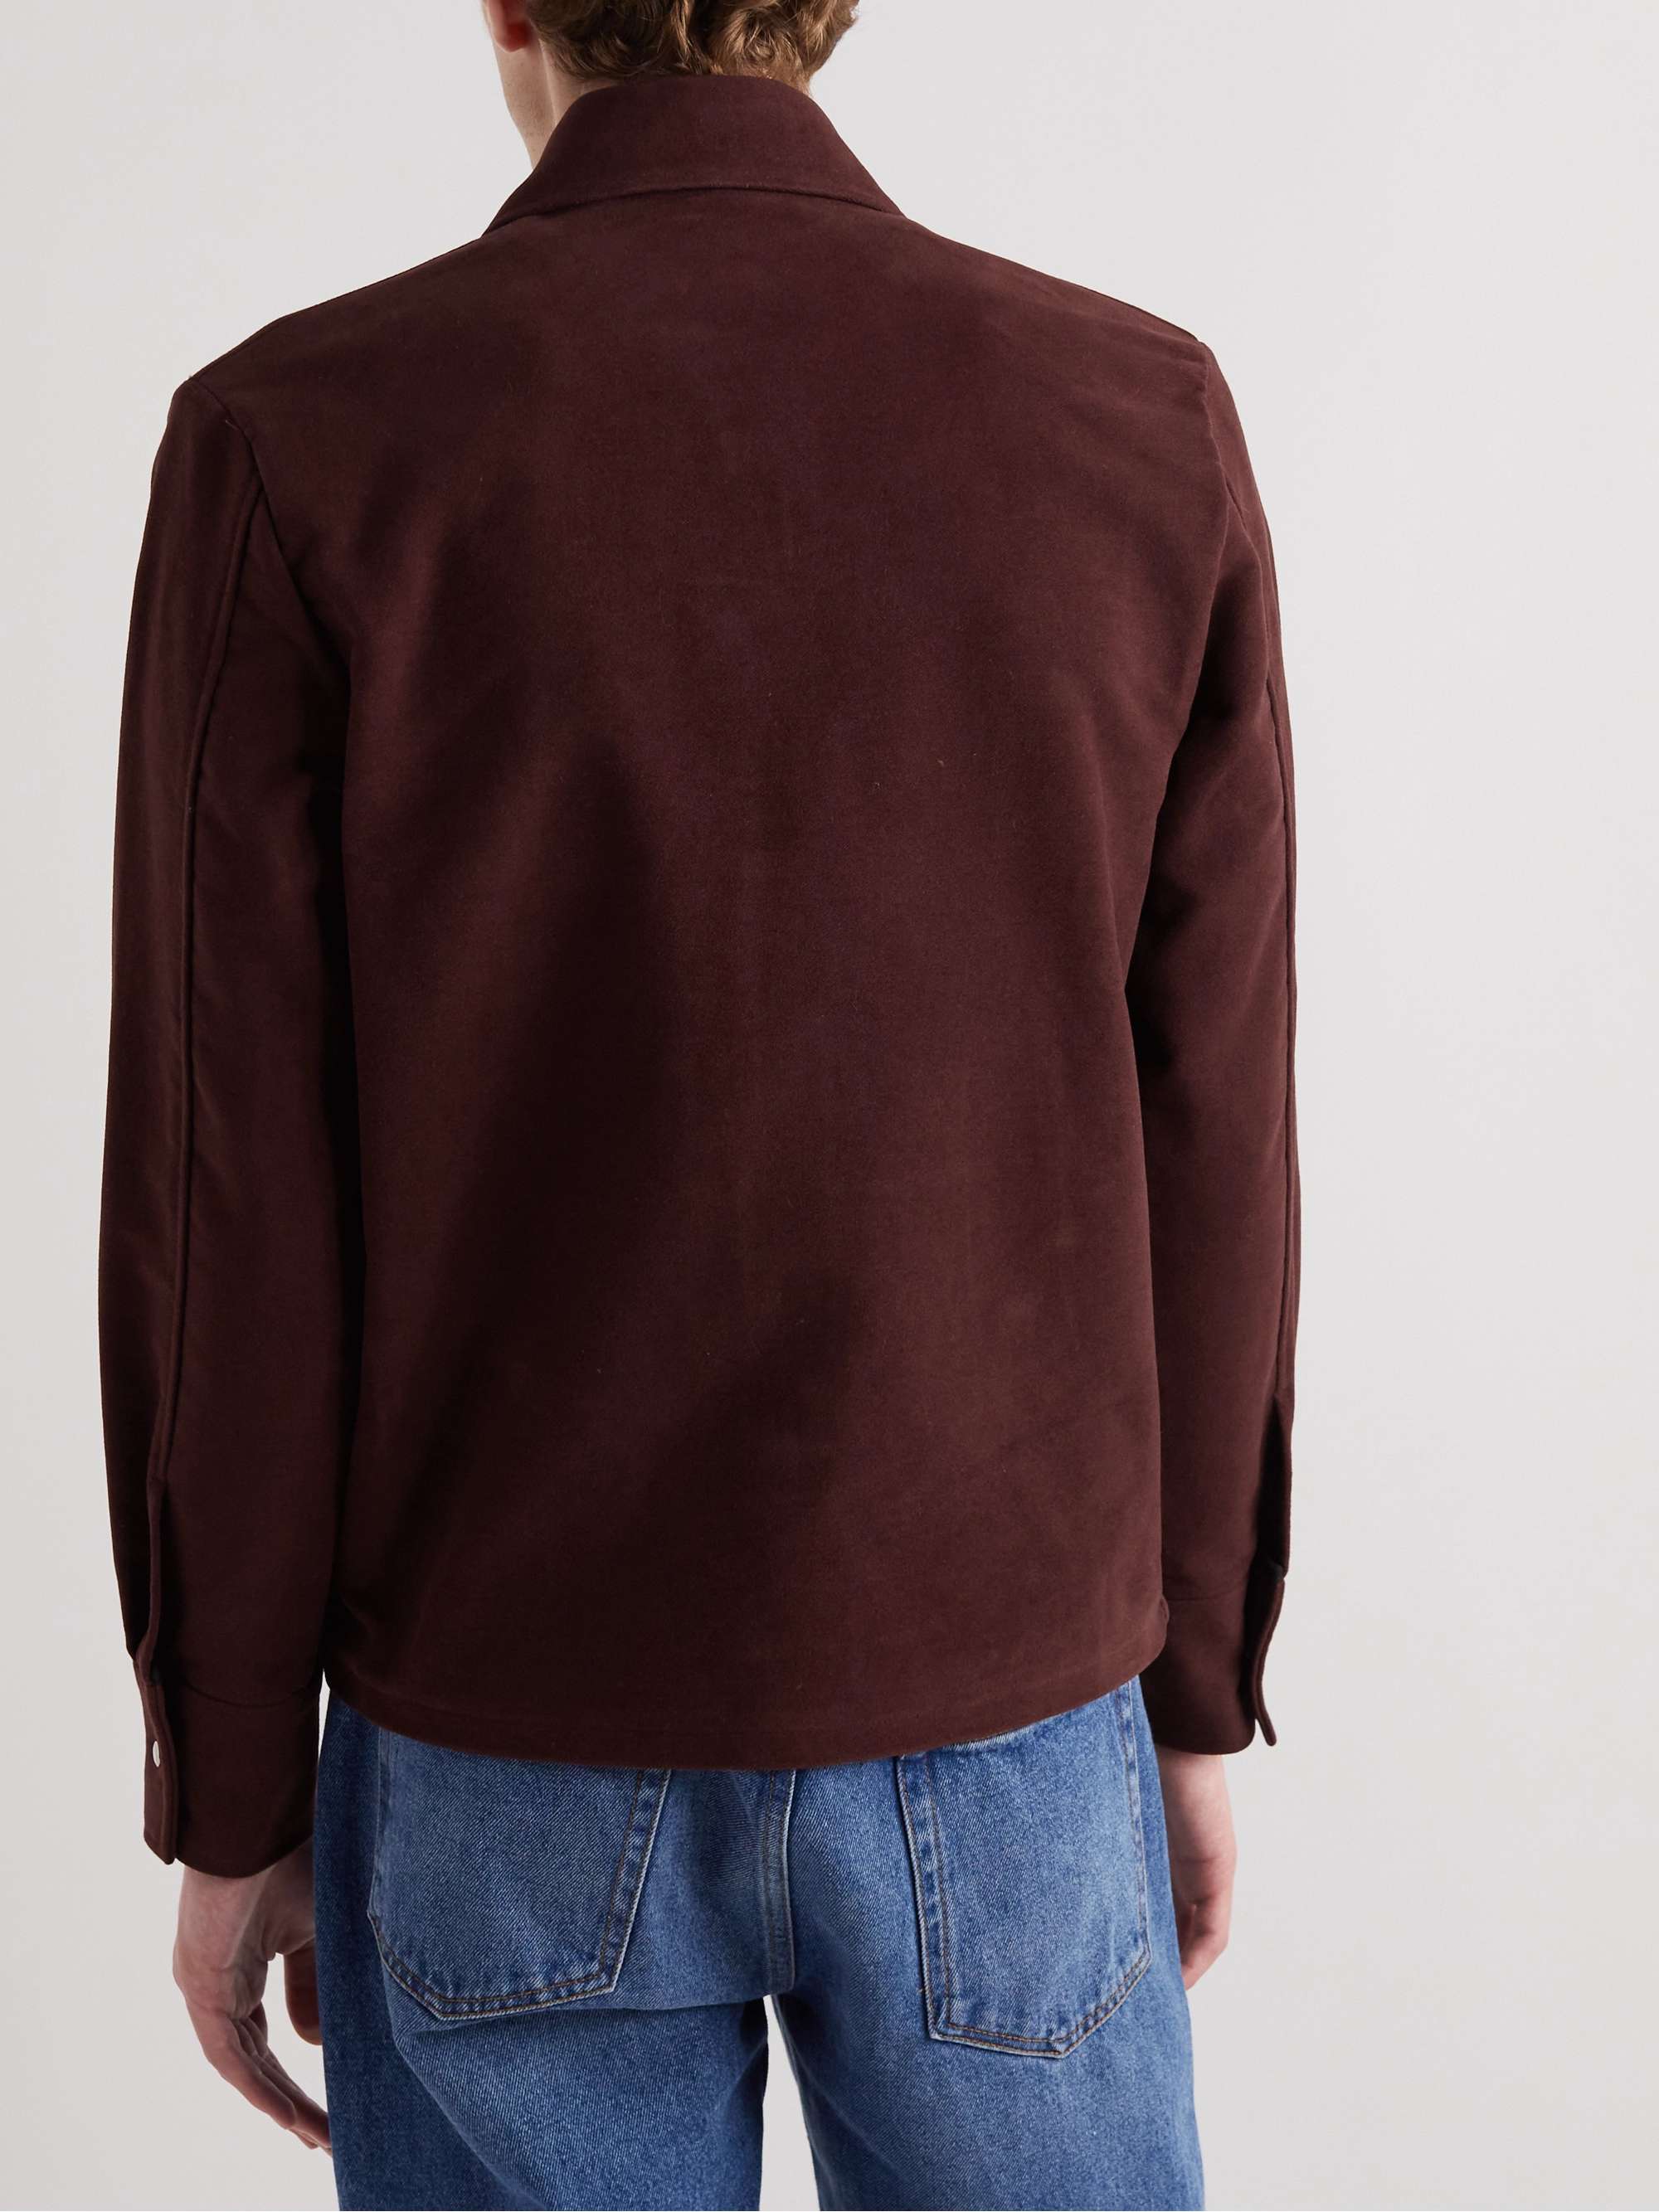 SÉFR Matsy Cotton-Moleskin Shirt Jacket